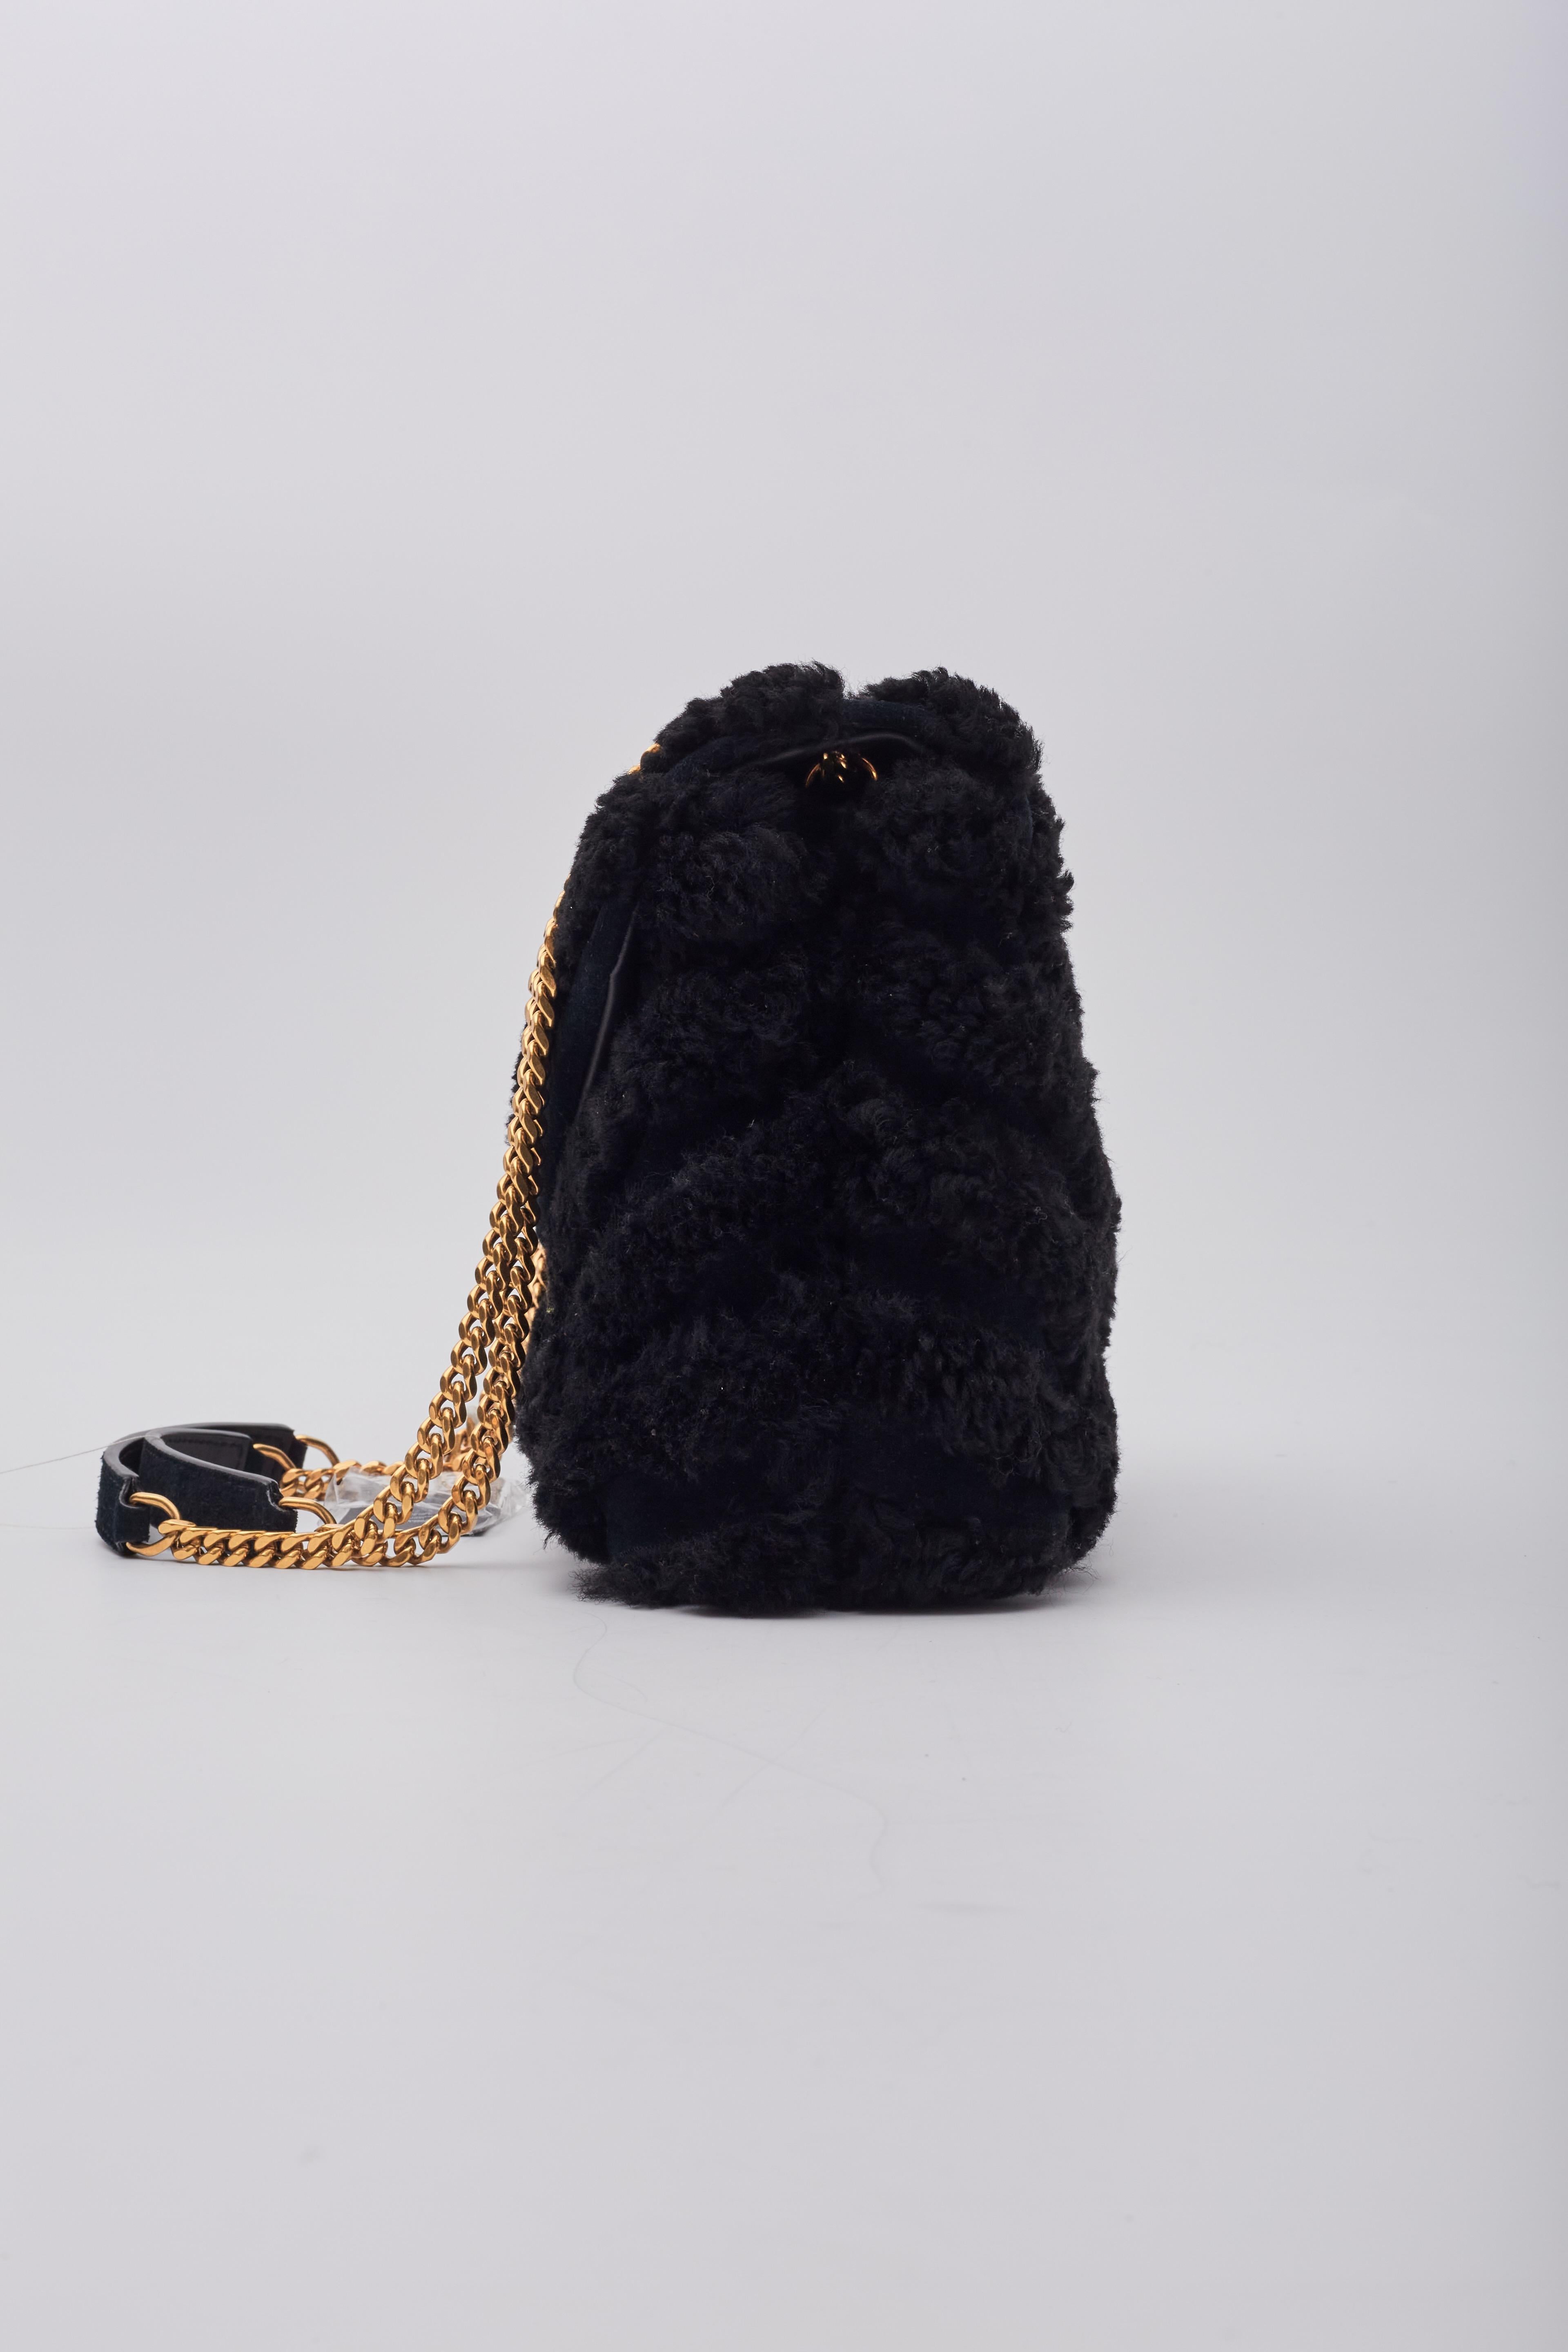 Saint Laurent Black Shearling Loulou Shoulder Bag Small For Sale 1